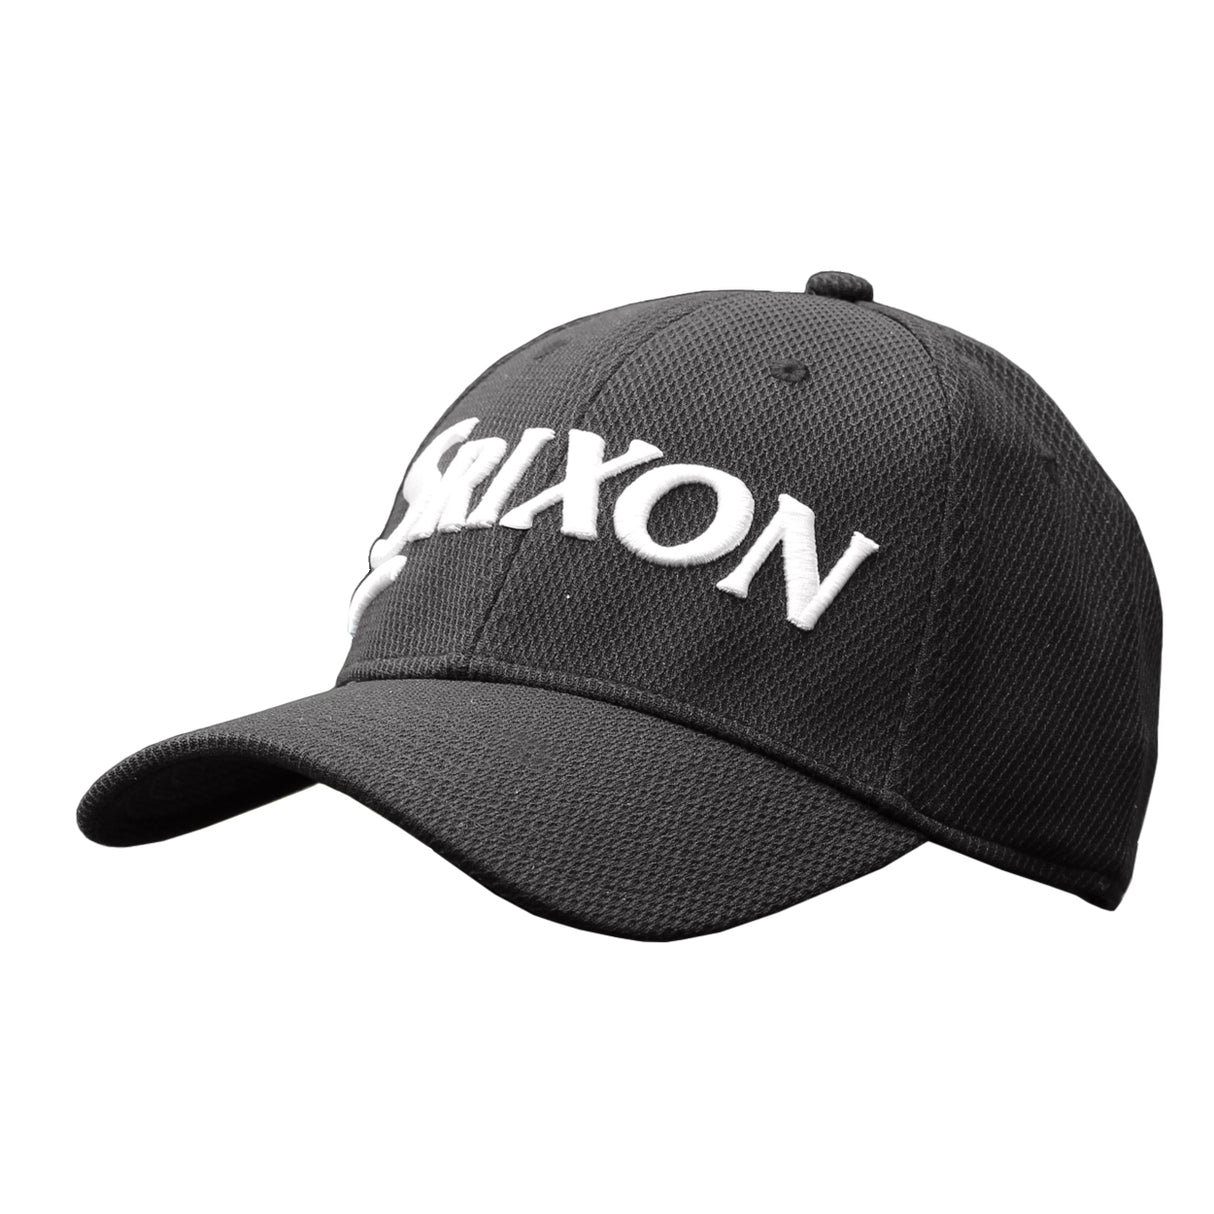 Srixon Golf Men's FlexiFit Fitted Hat